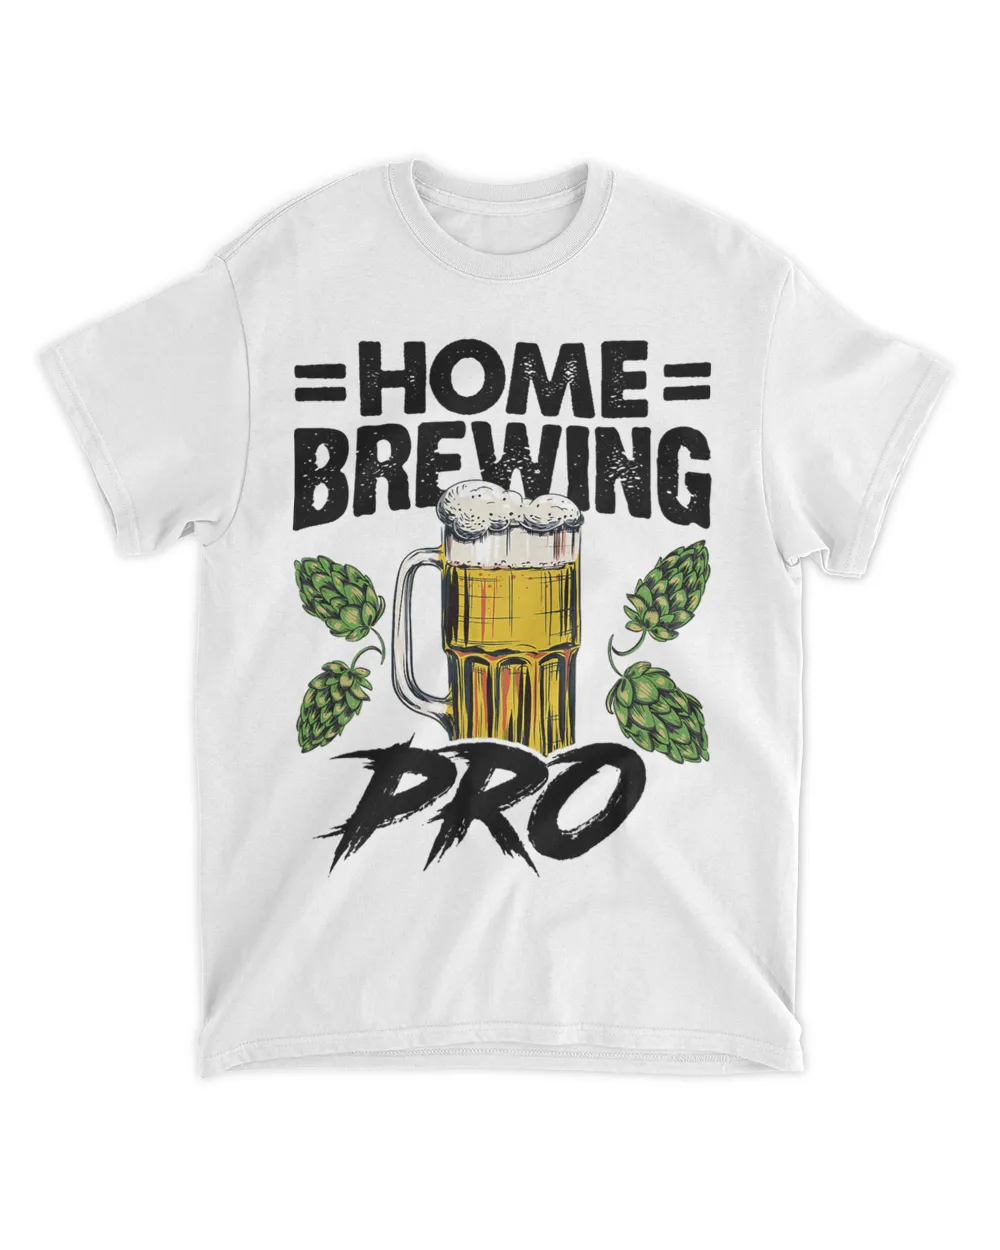 Home Brewing Pro Malt Hop Craftbeer Brewery Homebrewer Beer 21